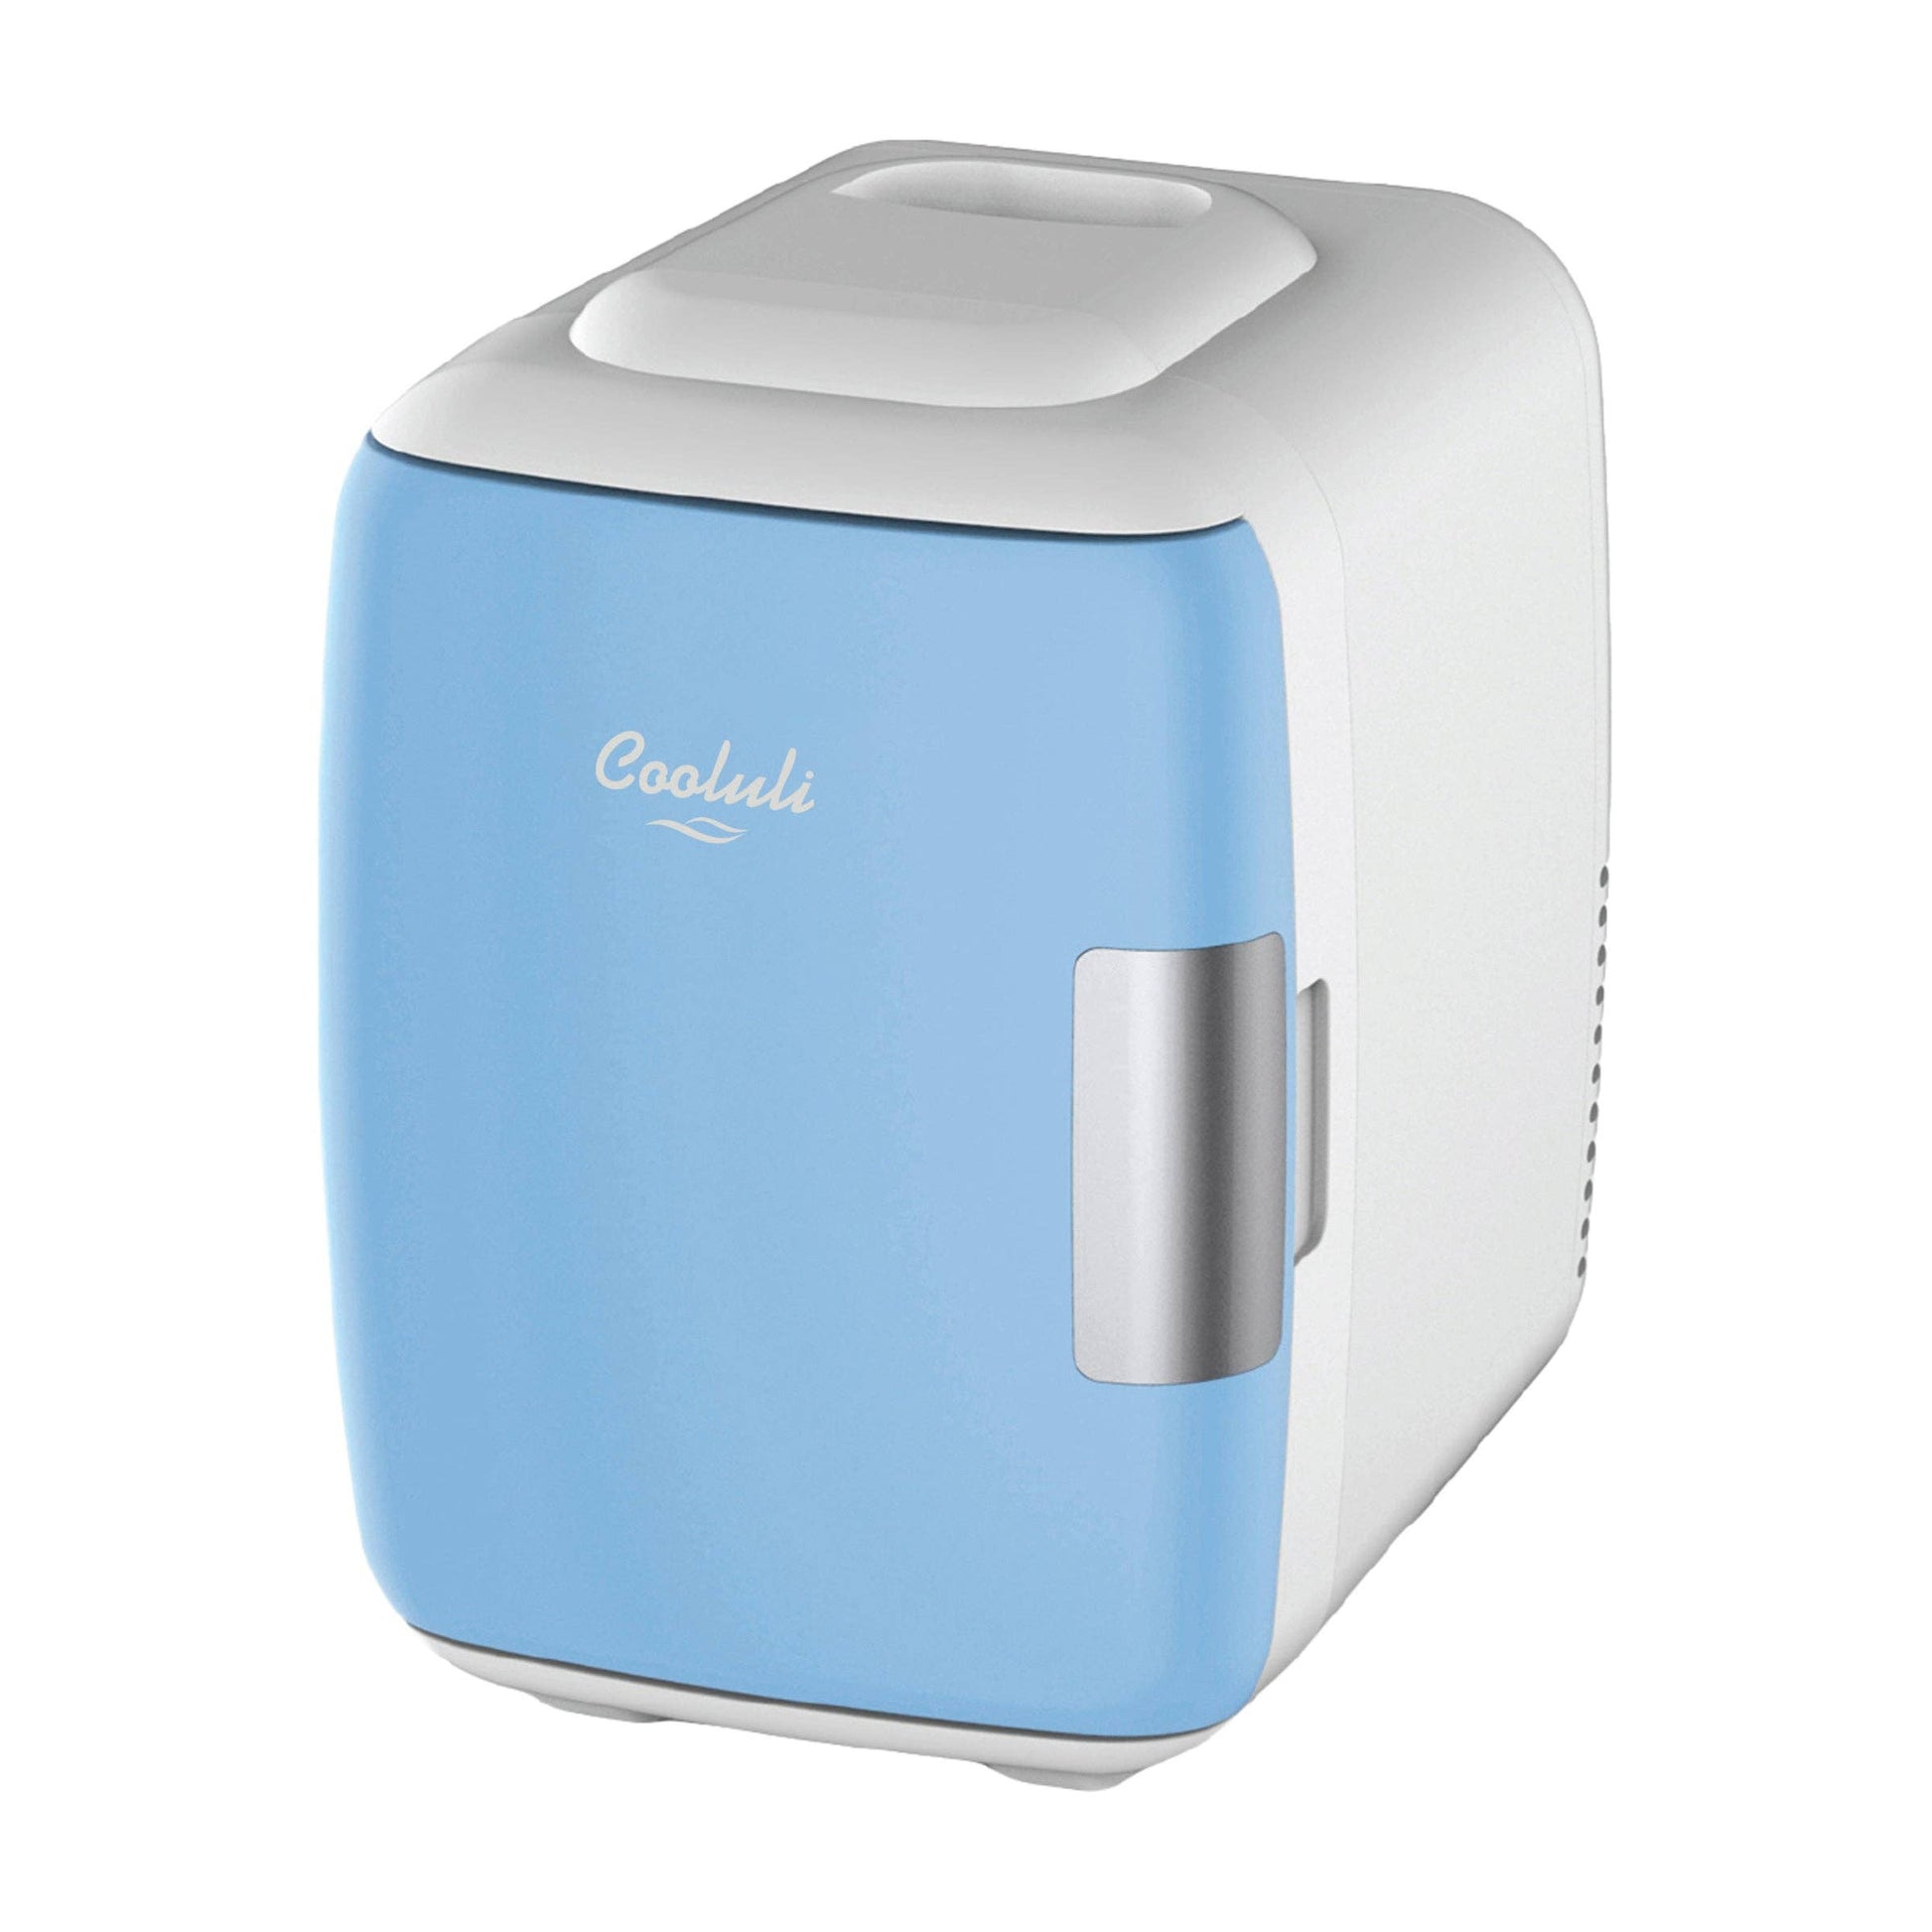 Cooluli Electric 4-Liter Portable Cooler/Warmer Mini Fridge Blue